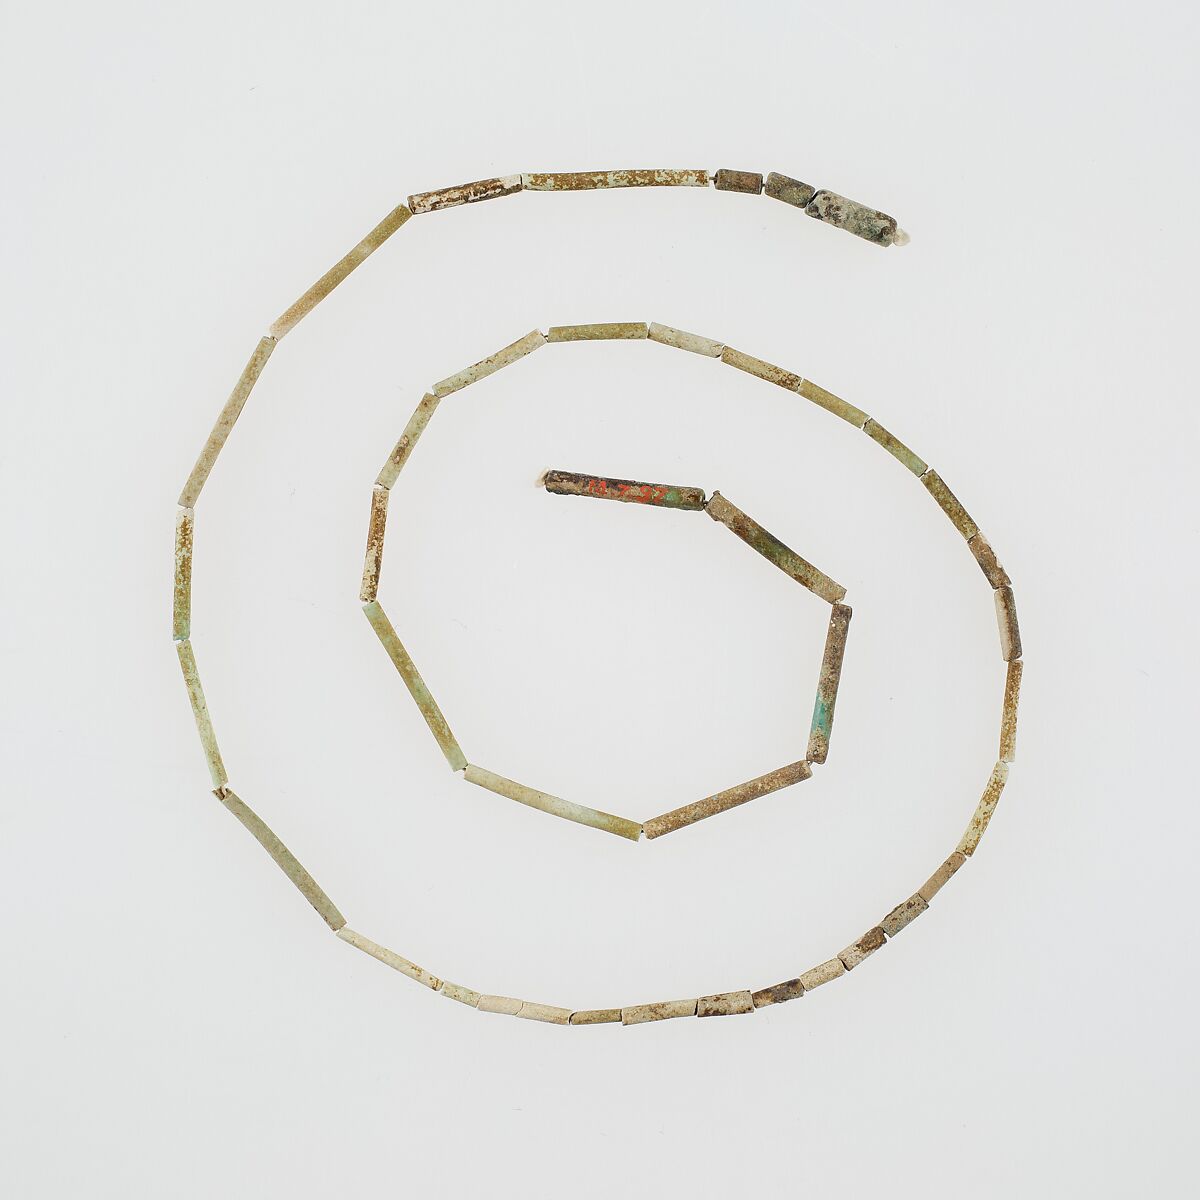 String of tubular beads